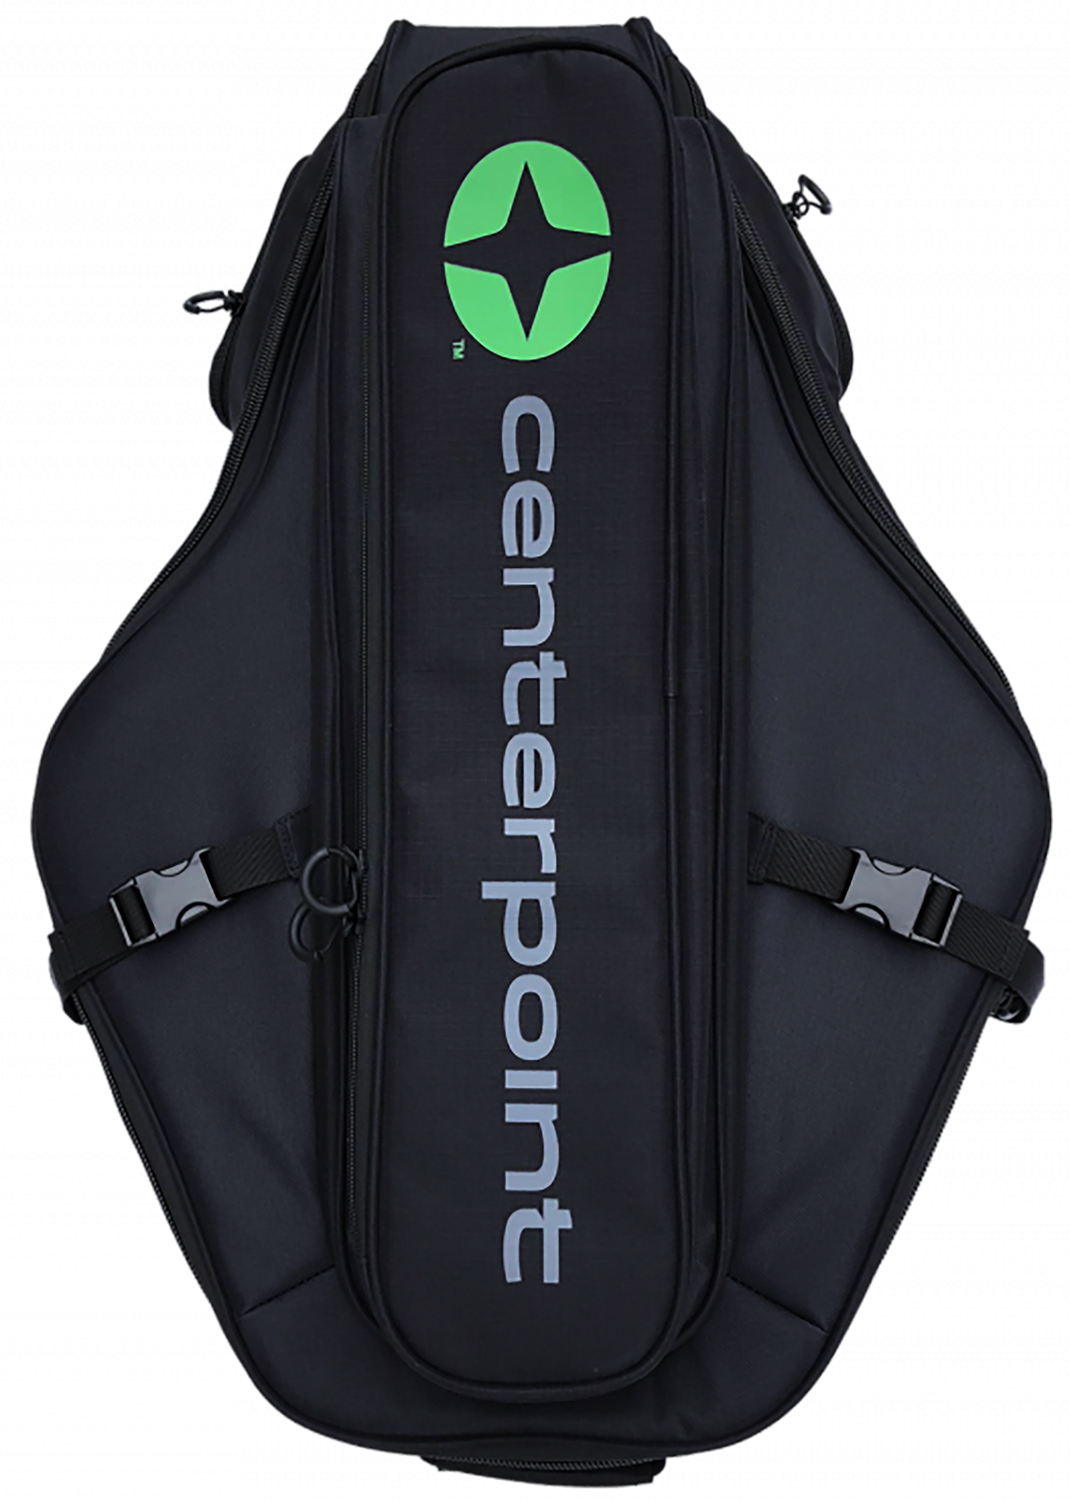 Centerpoint AXCHXBGS Crossbow Hybrid Bag Wrath 430 SC/X